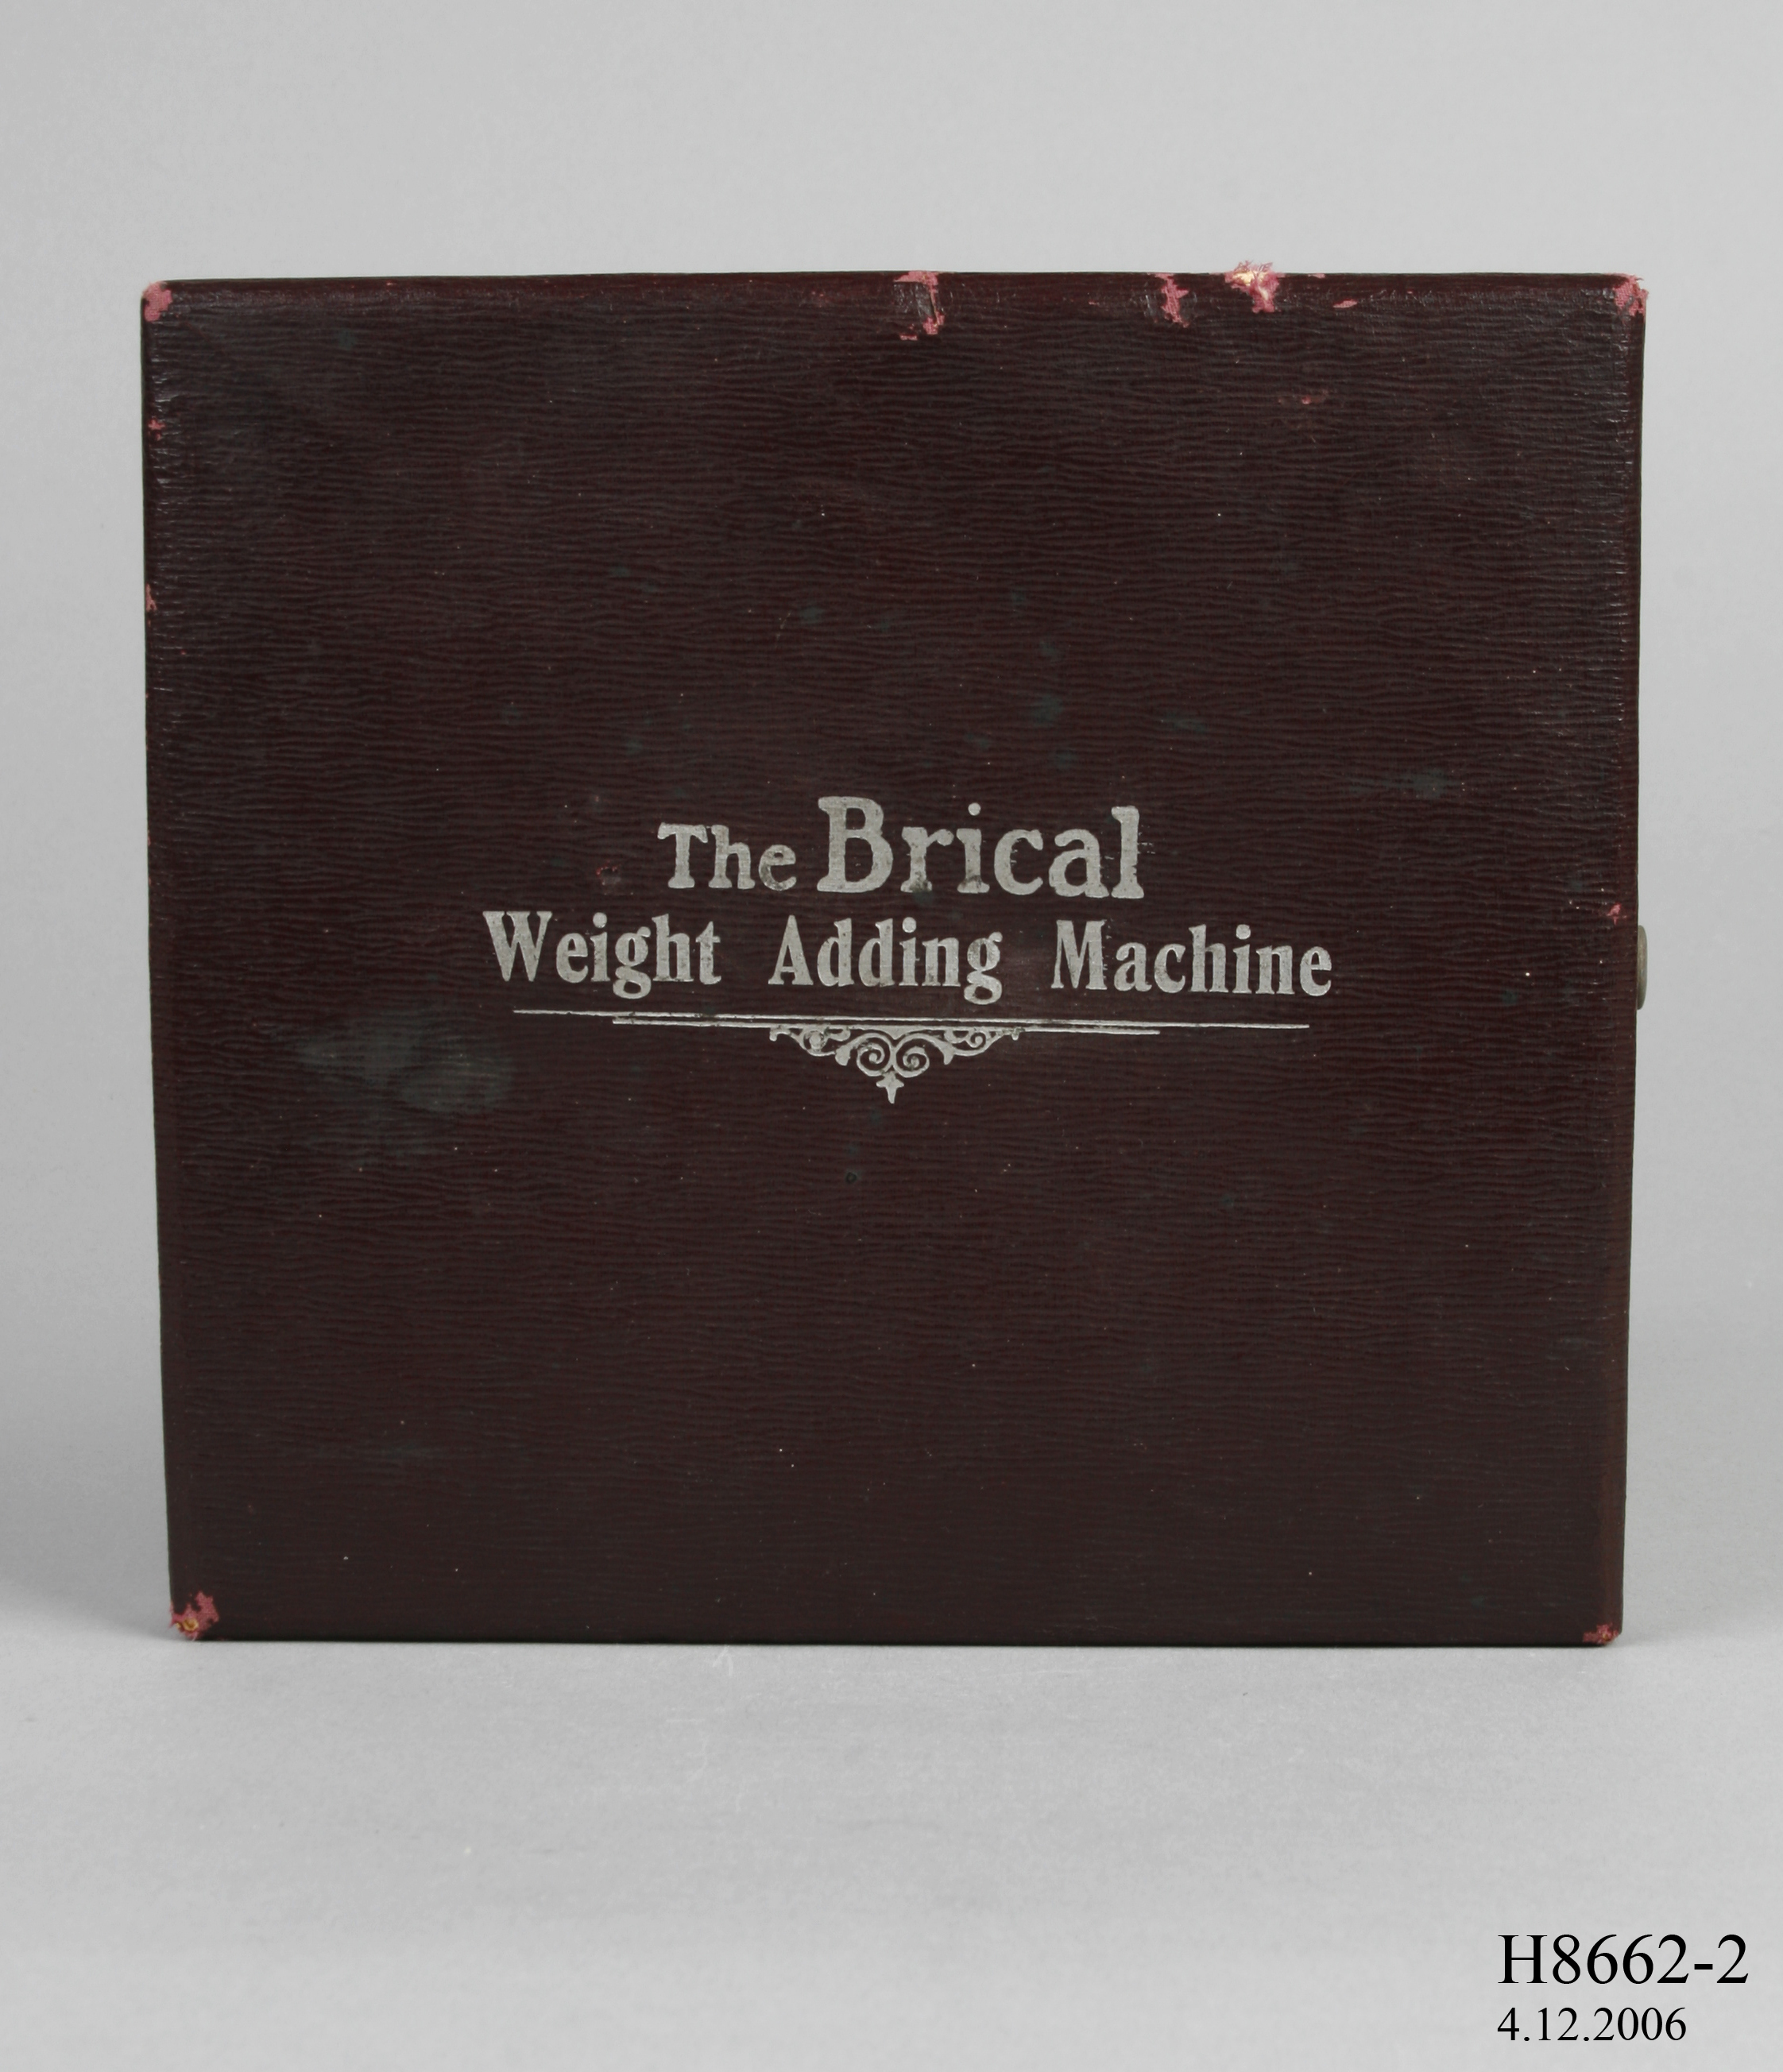 A 'Brical Weight Adding Machine'.